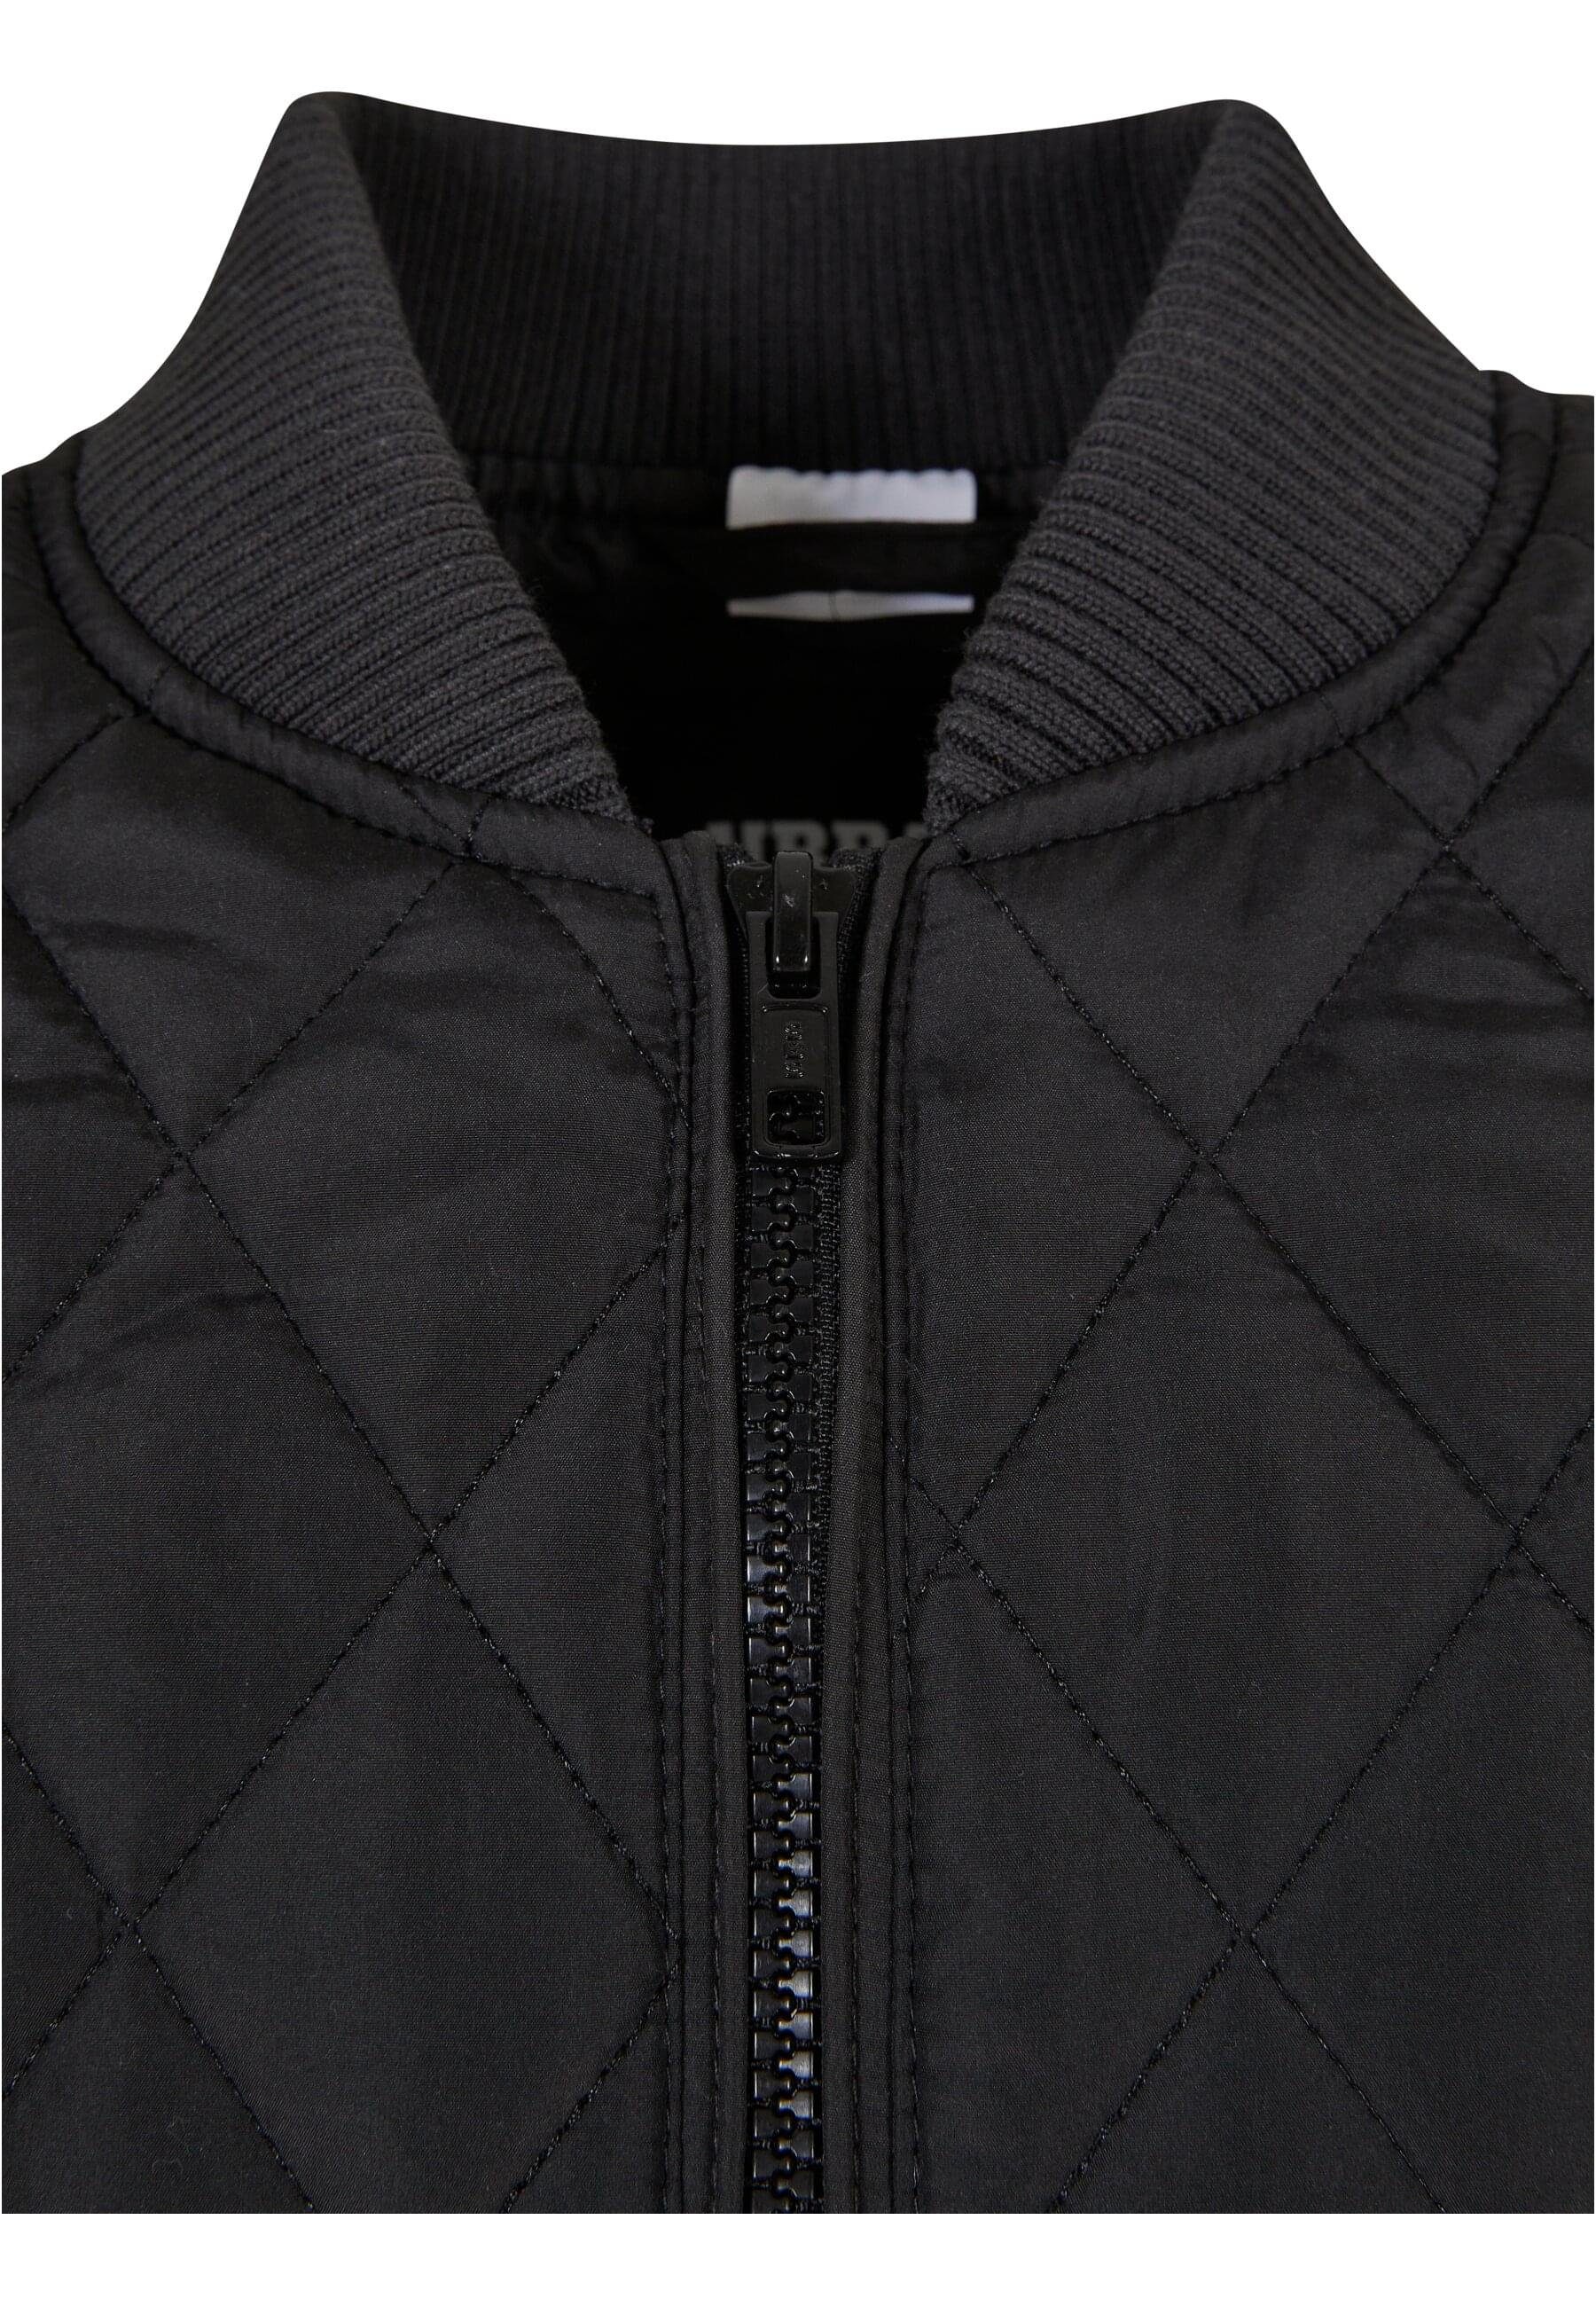 URBAN CLASSICS Jacket Damen Quilt black Nylon Outdoorjacke Diamond (1-St) Girls